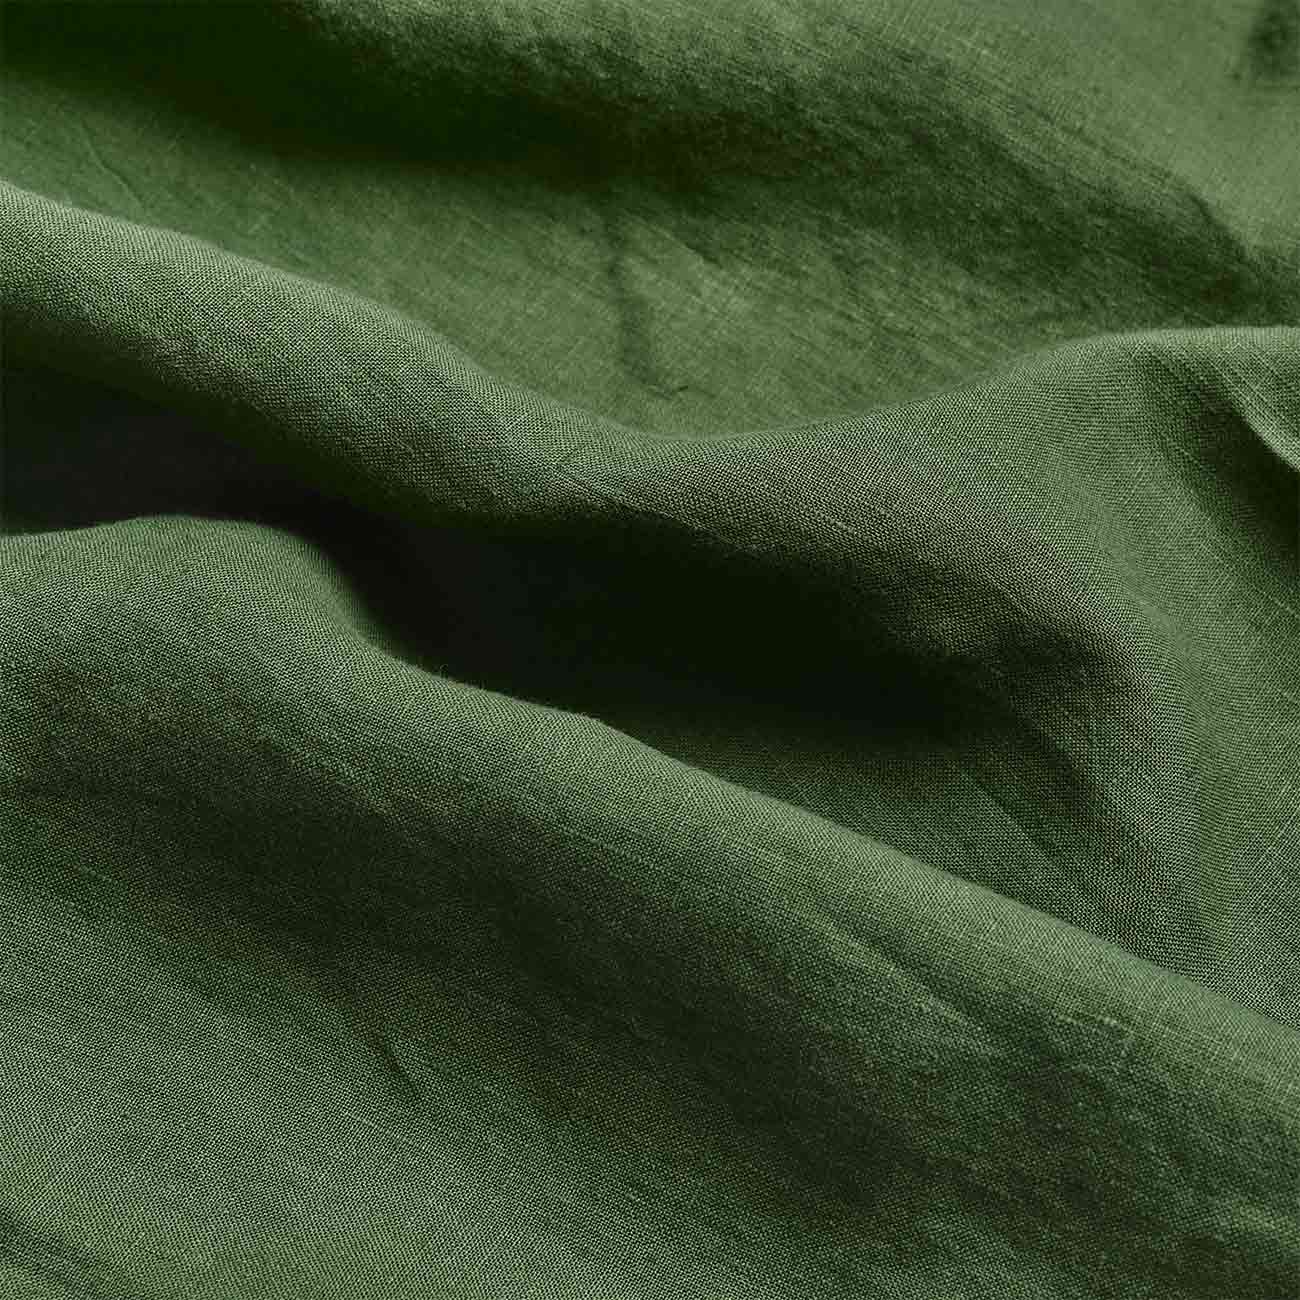 Forest Green Linen Duvet Cover